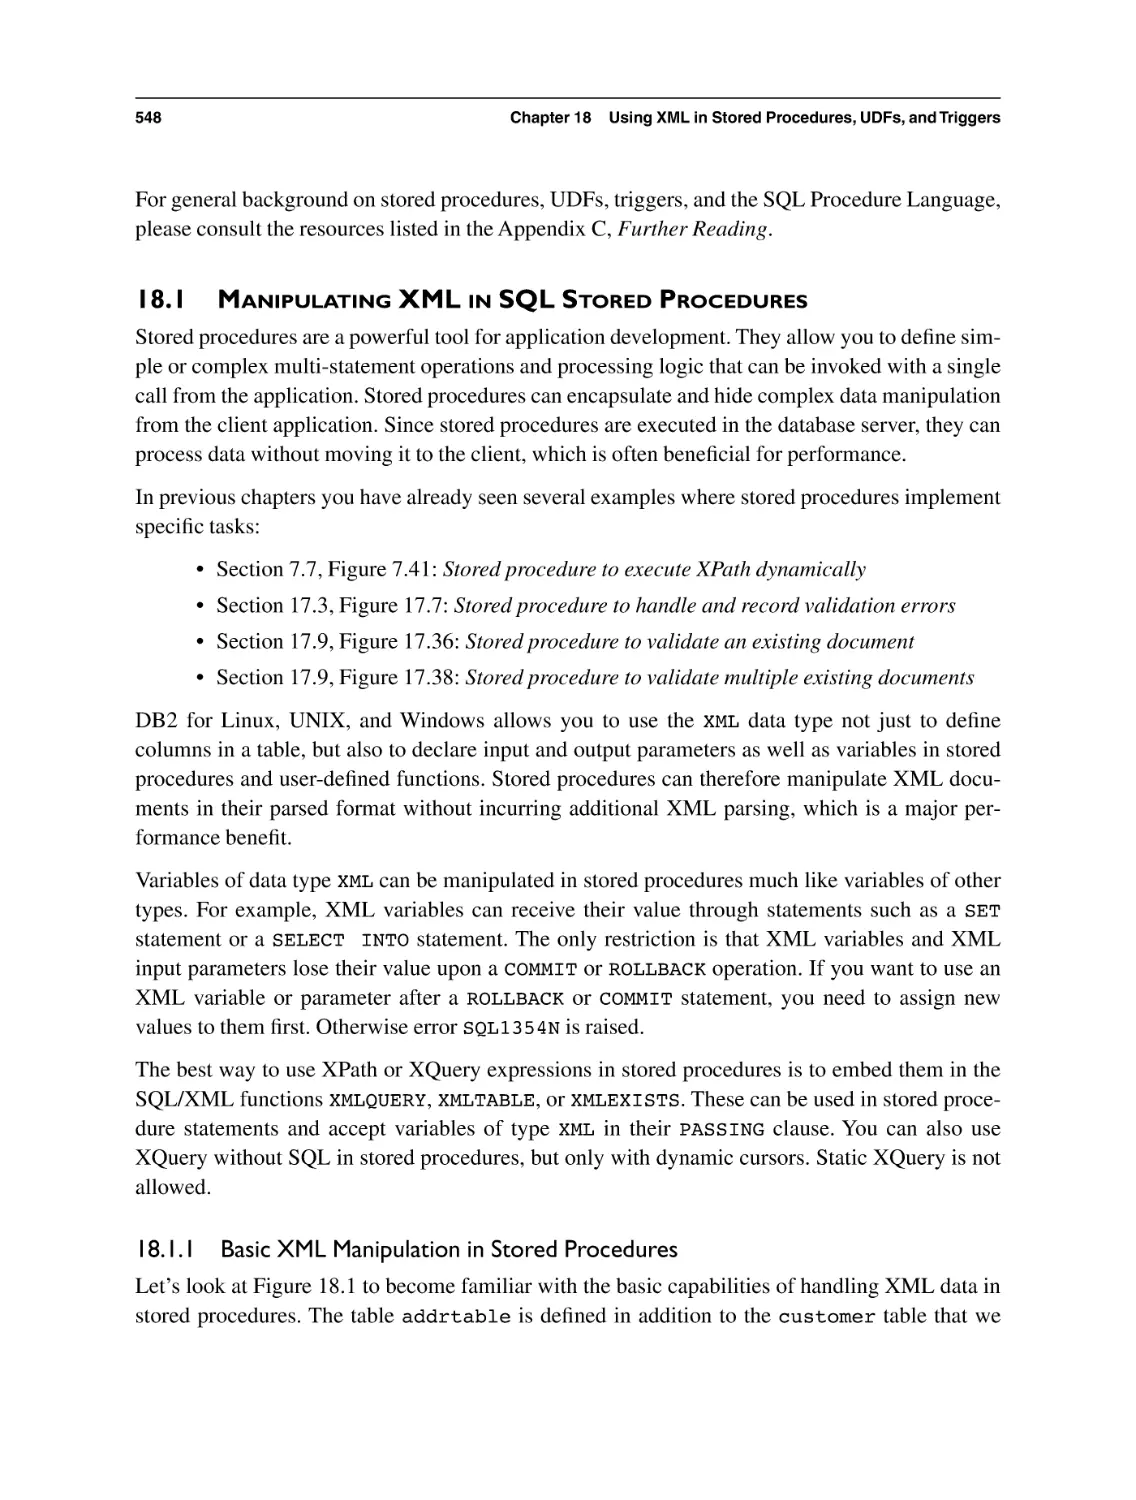 18.1 Manipulating XML in SQL Stored Procedures
18.1.1 Basic XML Manipulation in Stored Procedures